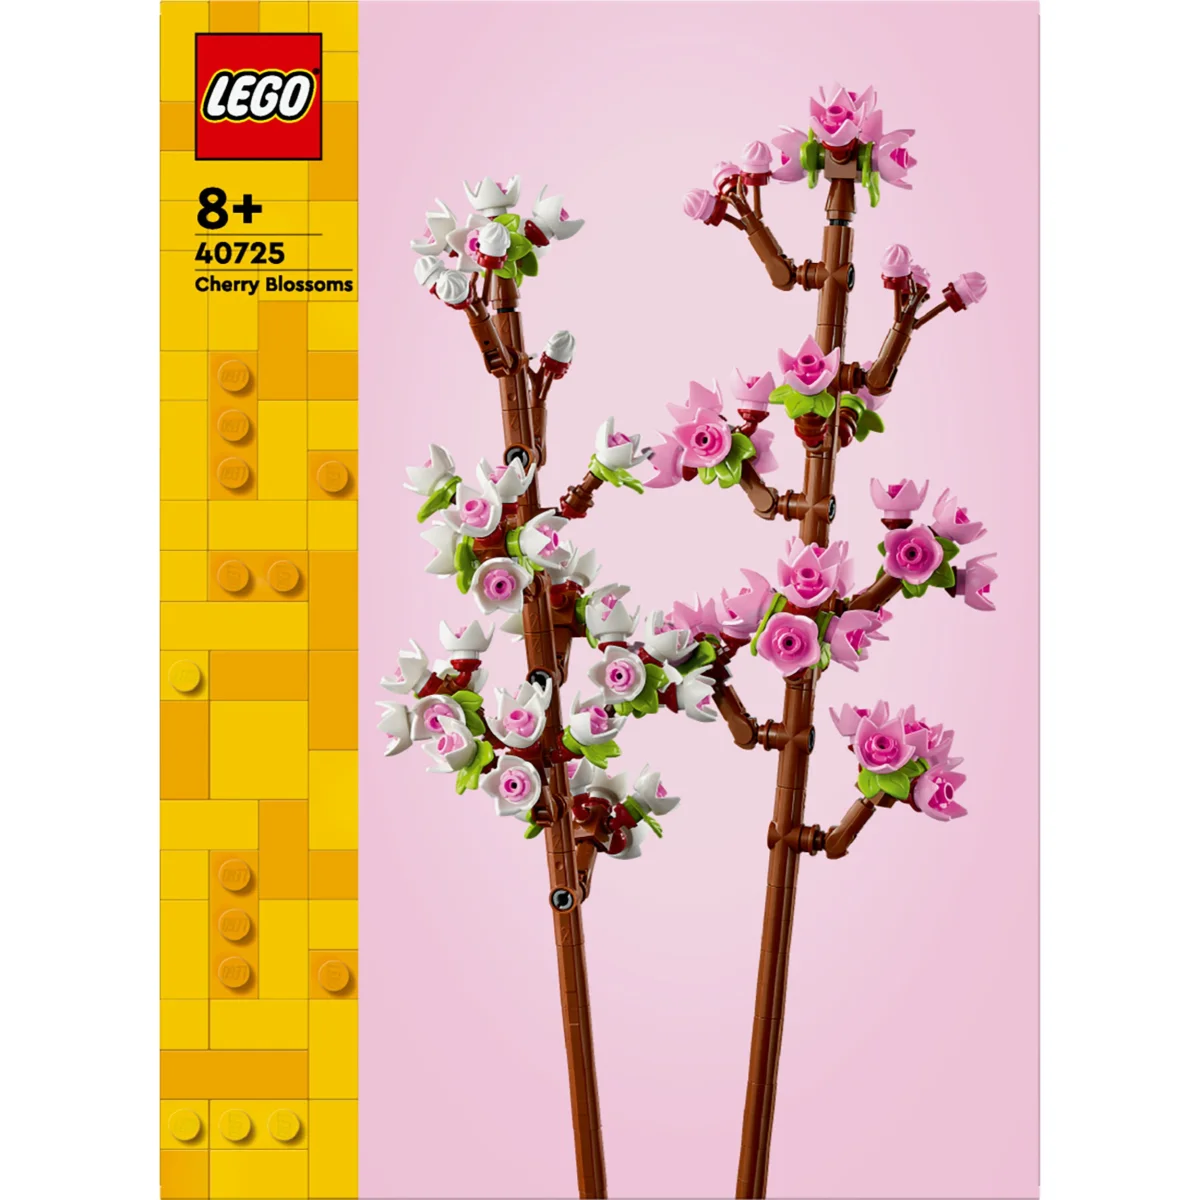 LEGO® Iconic Kirschblüten 40725